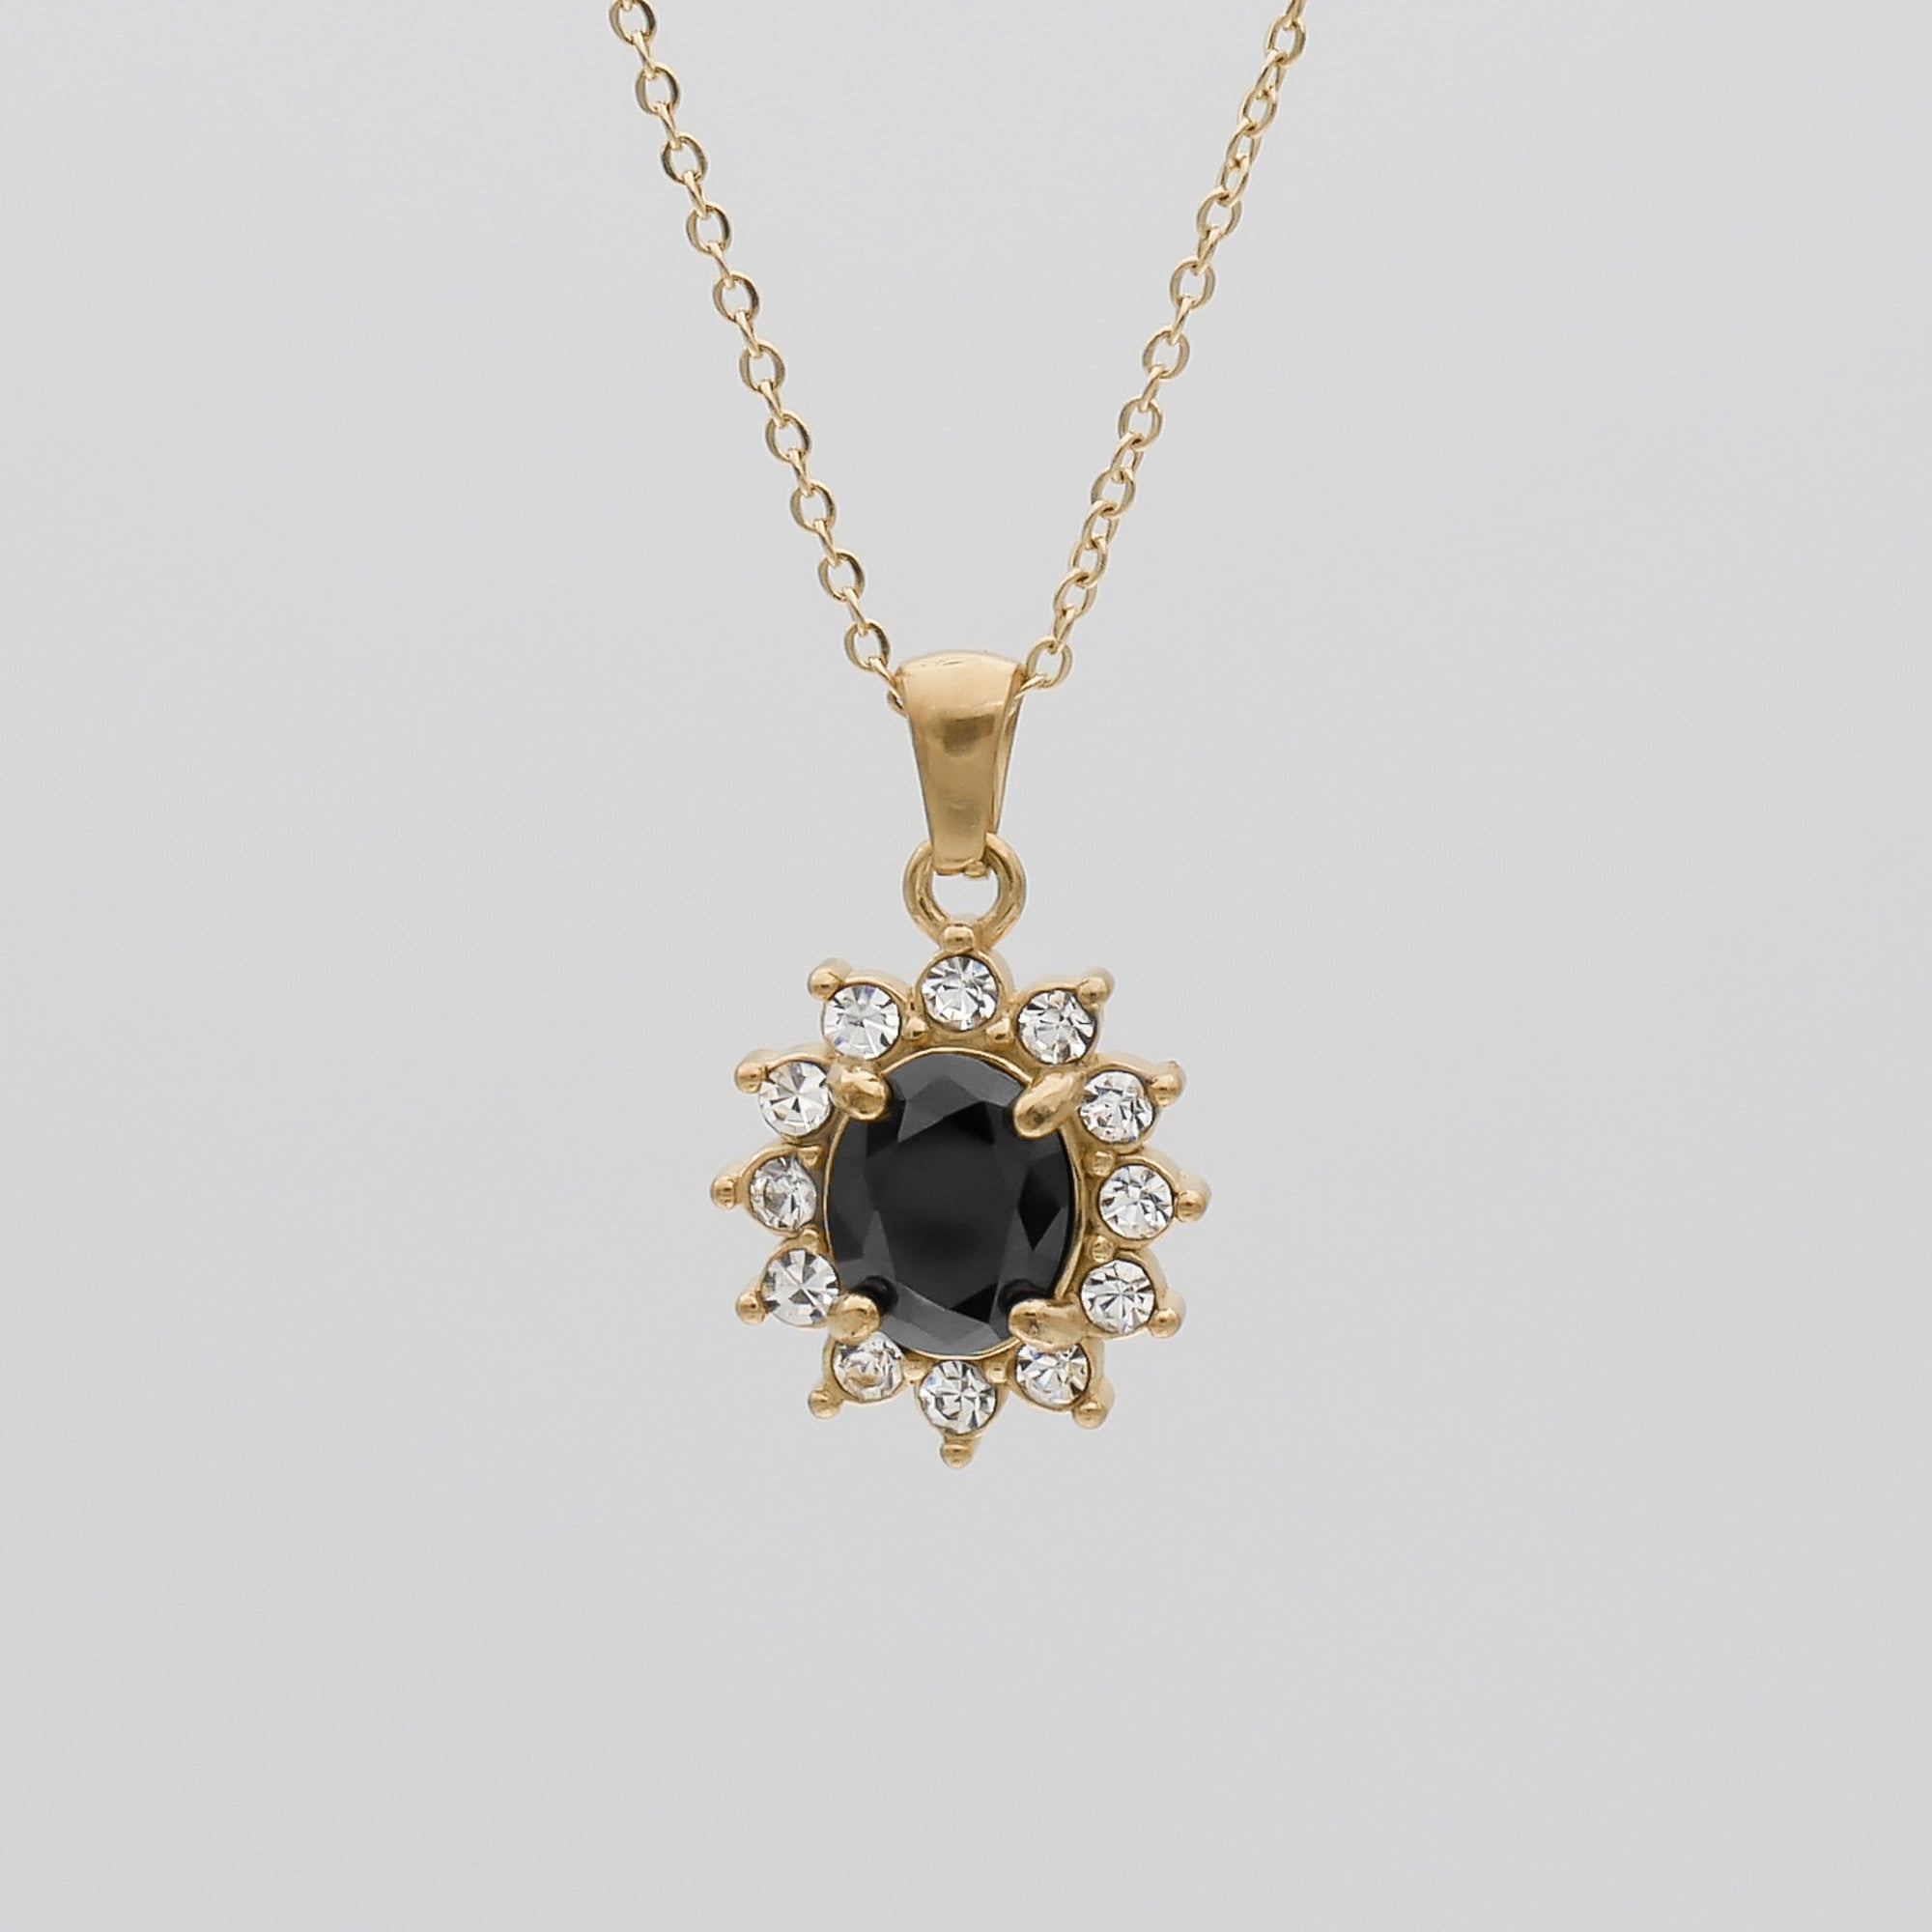 Gold Phoebe Onyx Gemstone Pendant Necklace with encrusted cubic Zirconia stones by PRYA